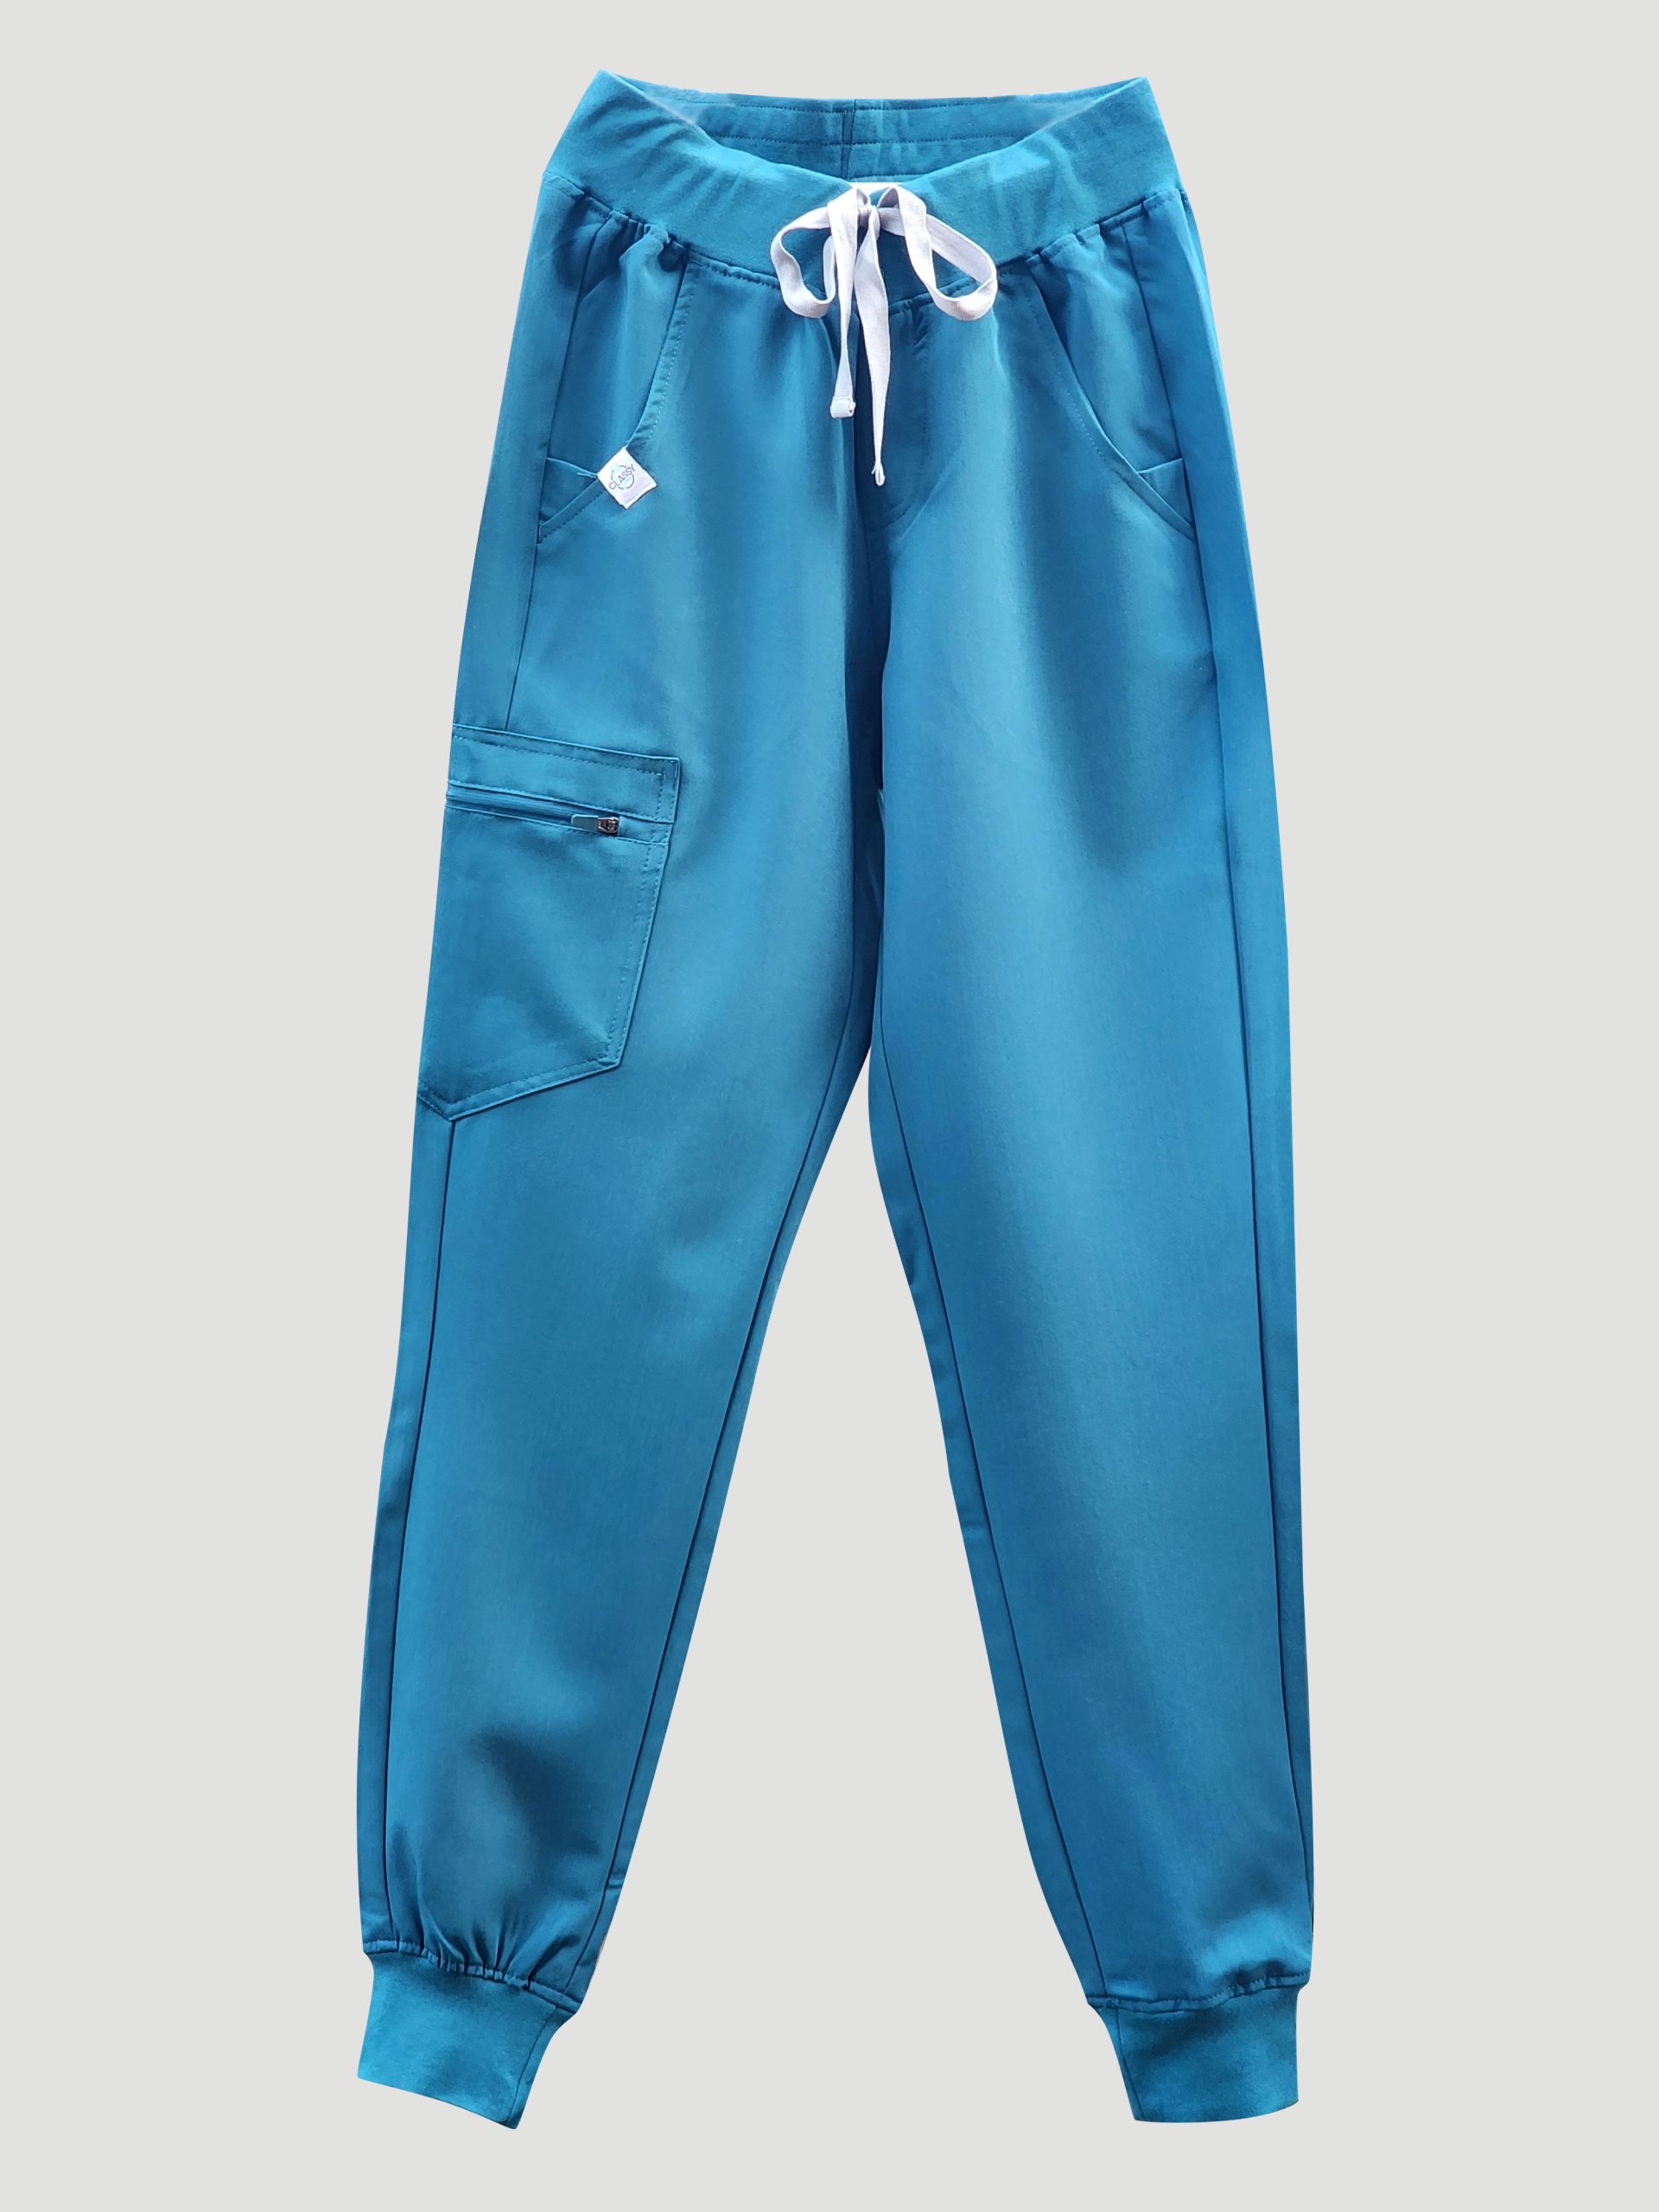 Caribbean Blue Jogger pants